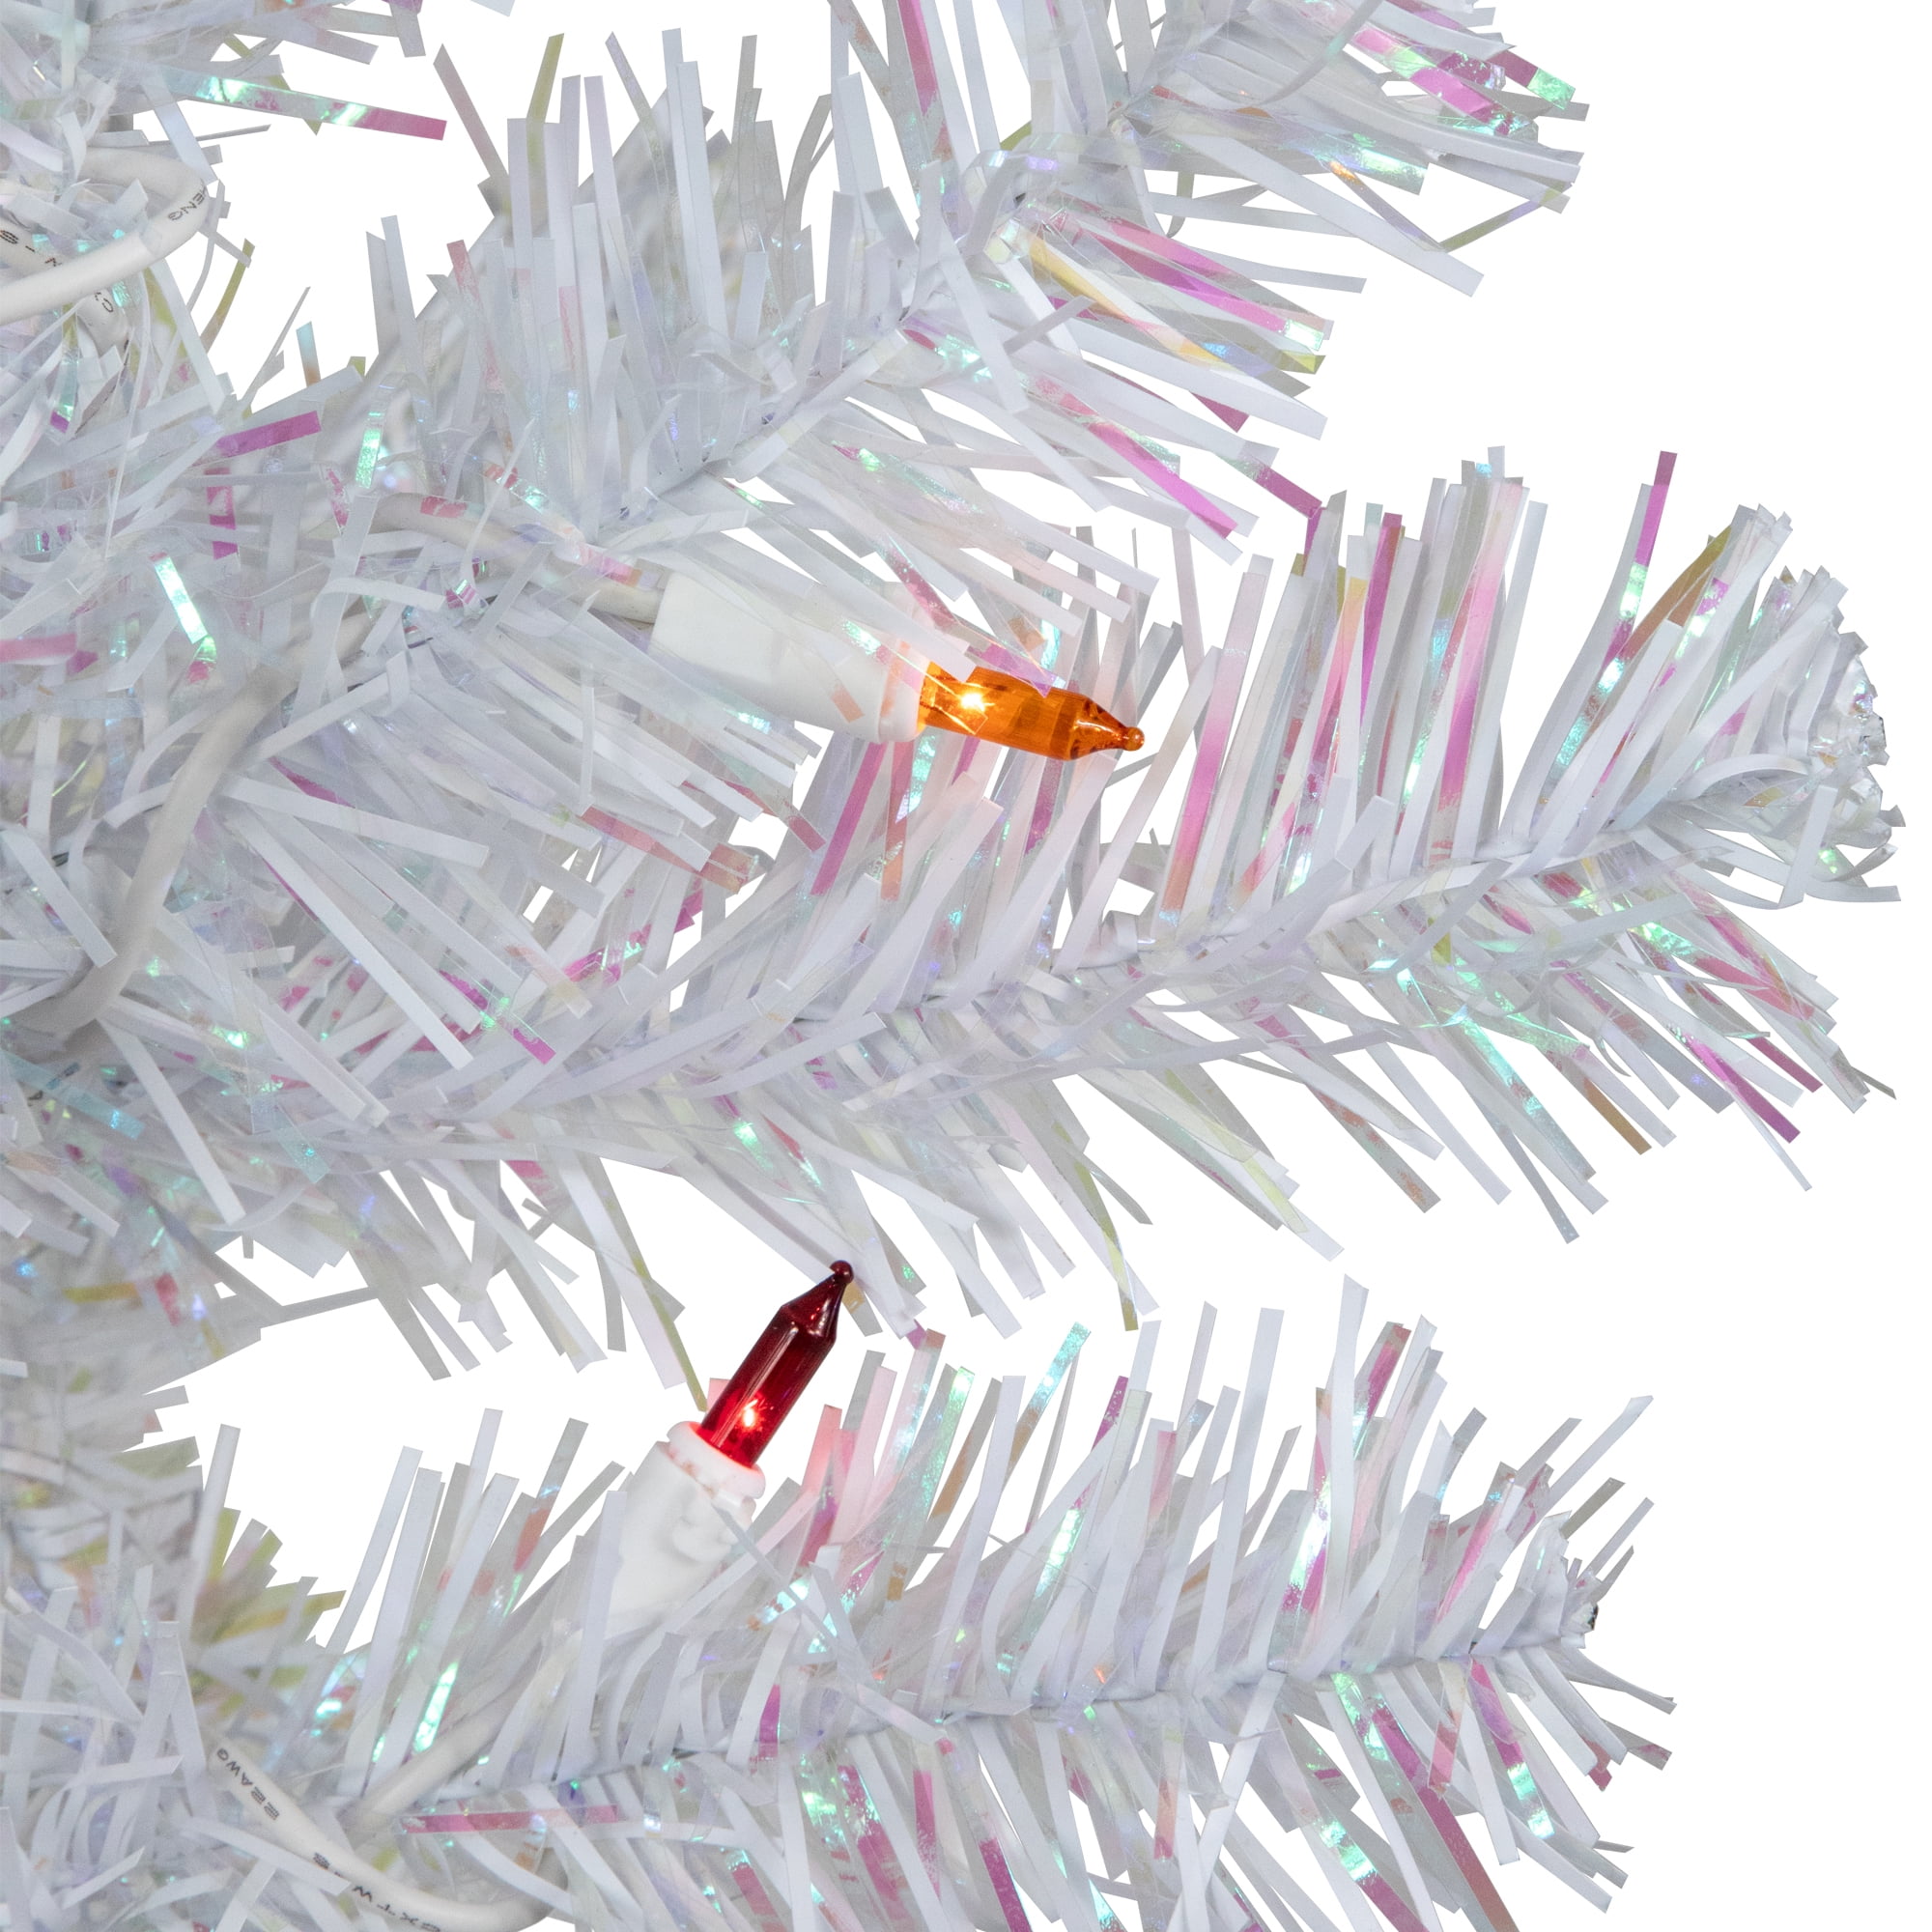 Northlight 3' White Iridescent Pine Artificial Christmas Tree - Unlit,  1.0000 - Harris Teeter